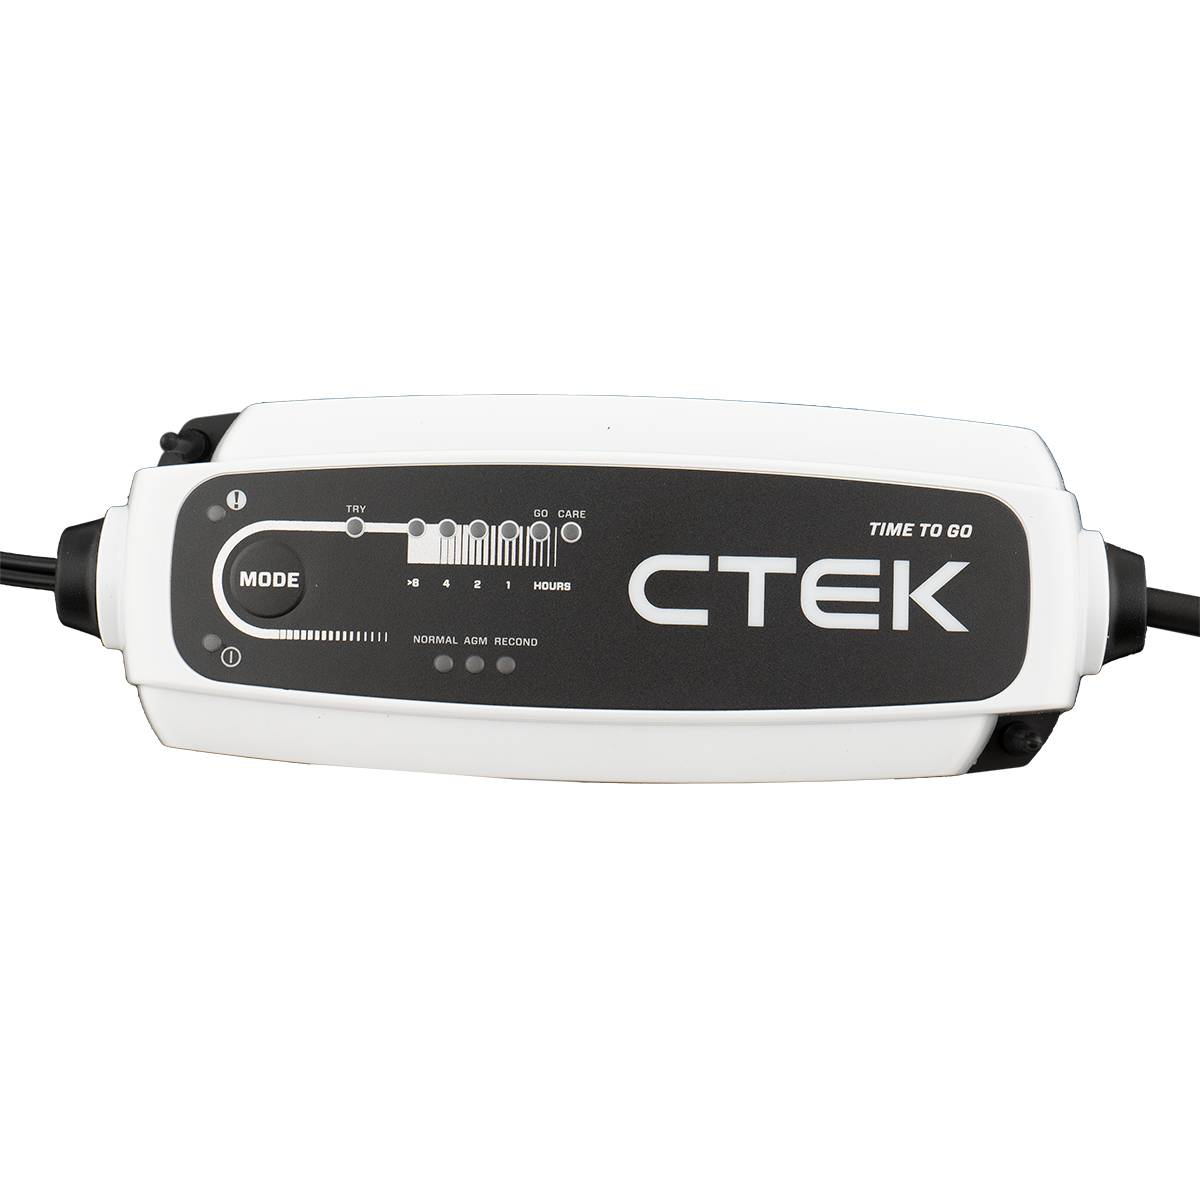 CTEK Ladegeräte für AGM Batterien CTEK Batterie Ladegeräte